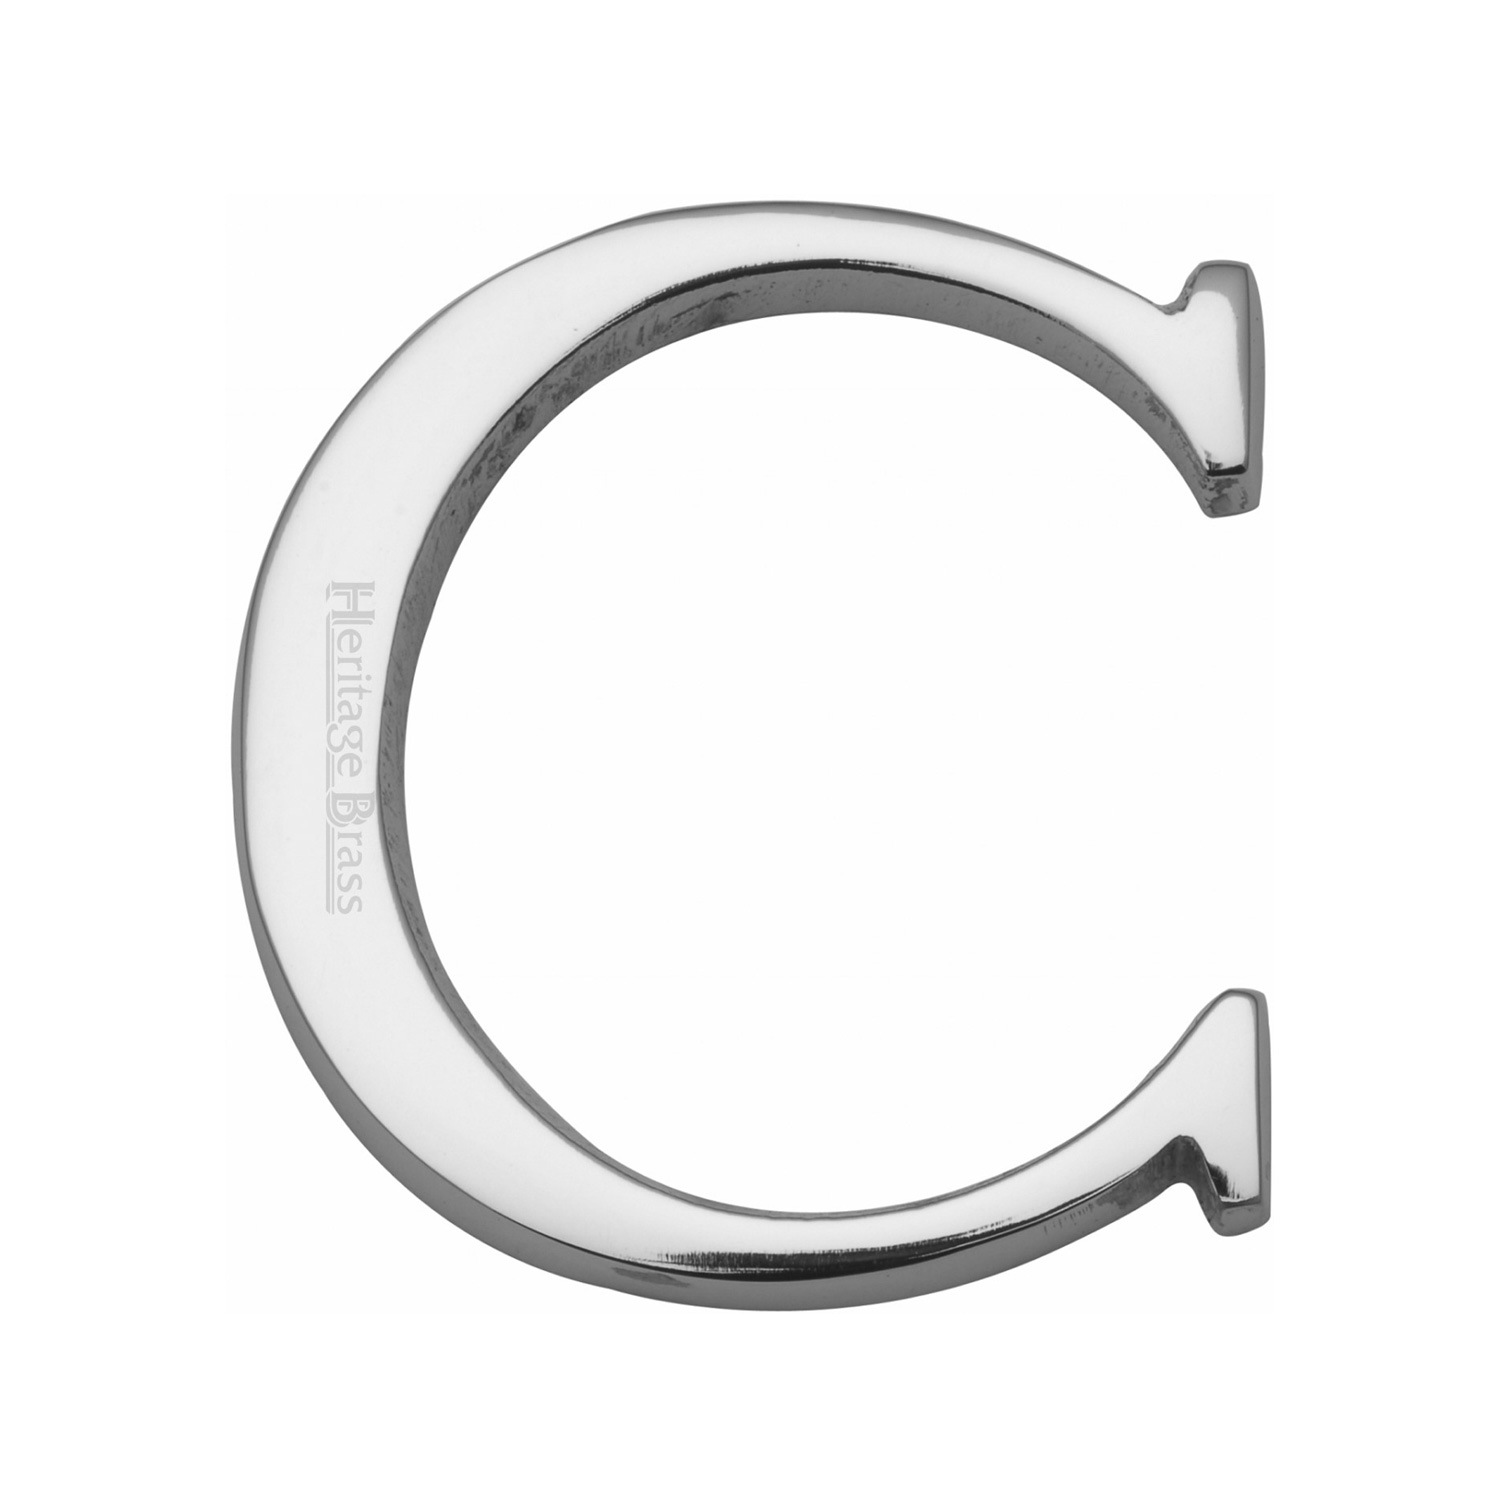 Heritage Brass Alphabet C Pin Fix 51mm (2")